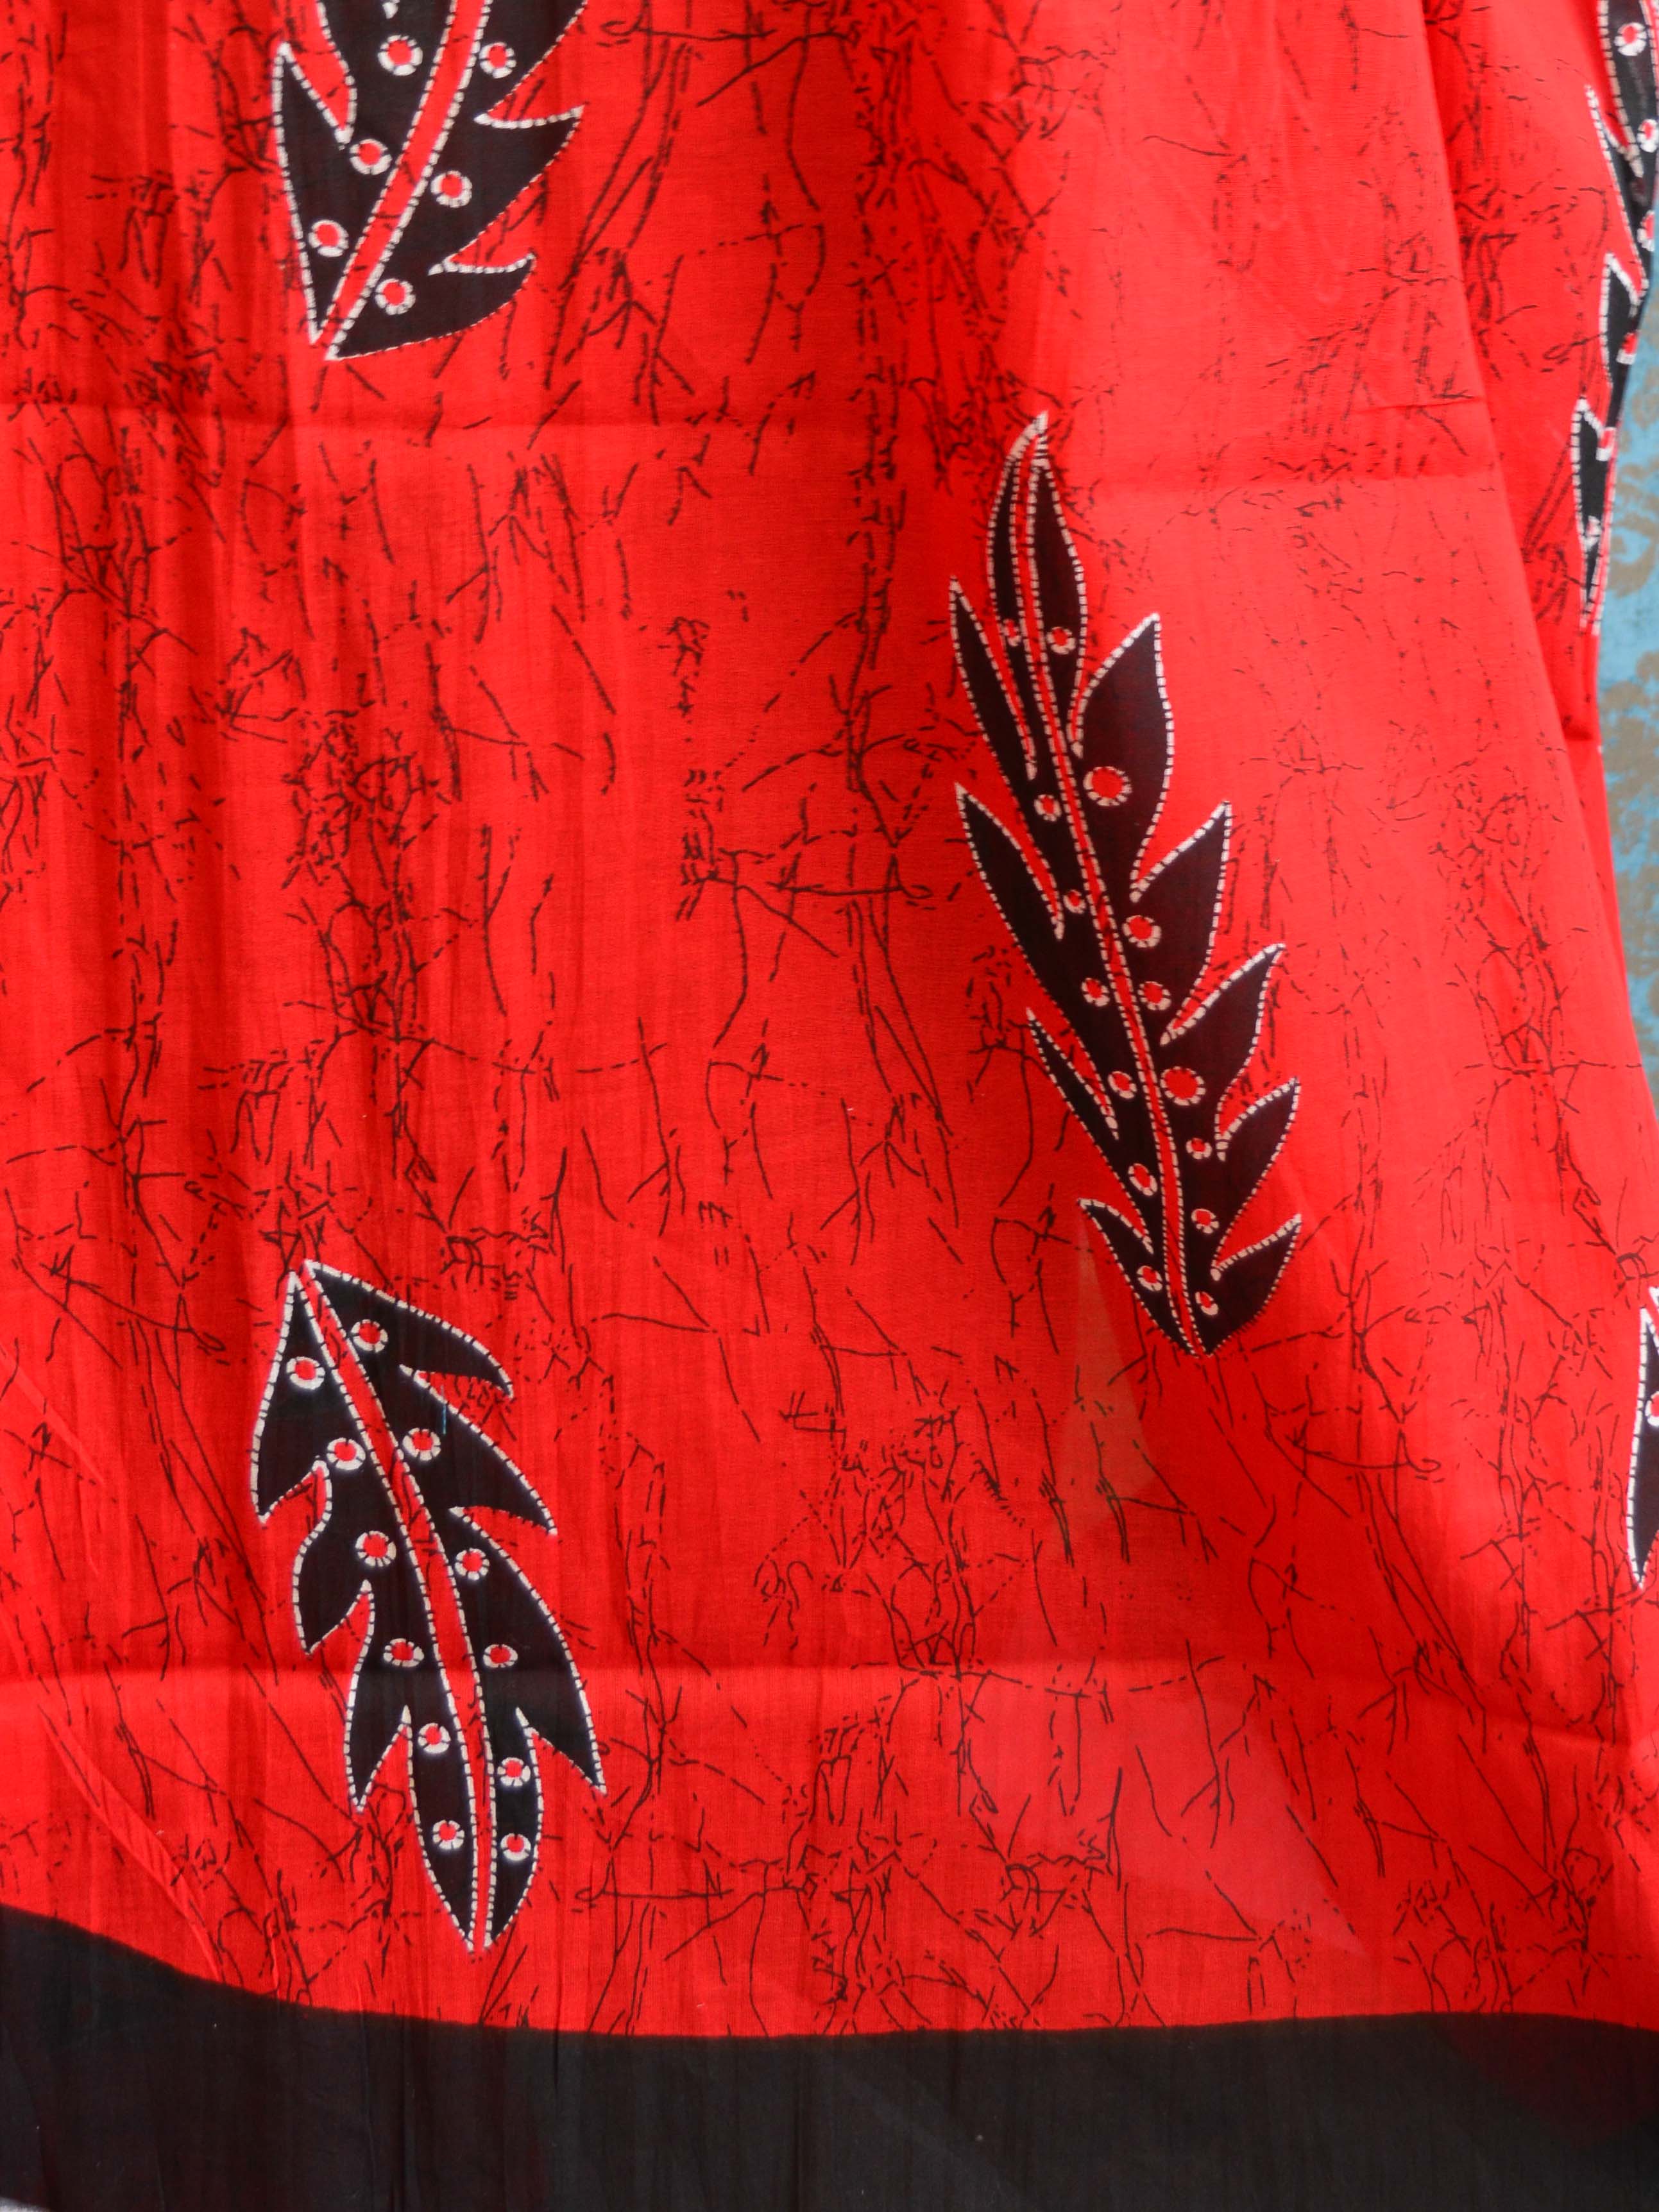 Handloom Mul Cotton Ajrakh Print Saree-Red